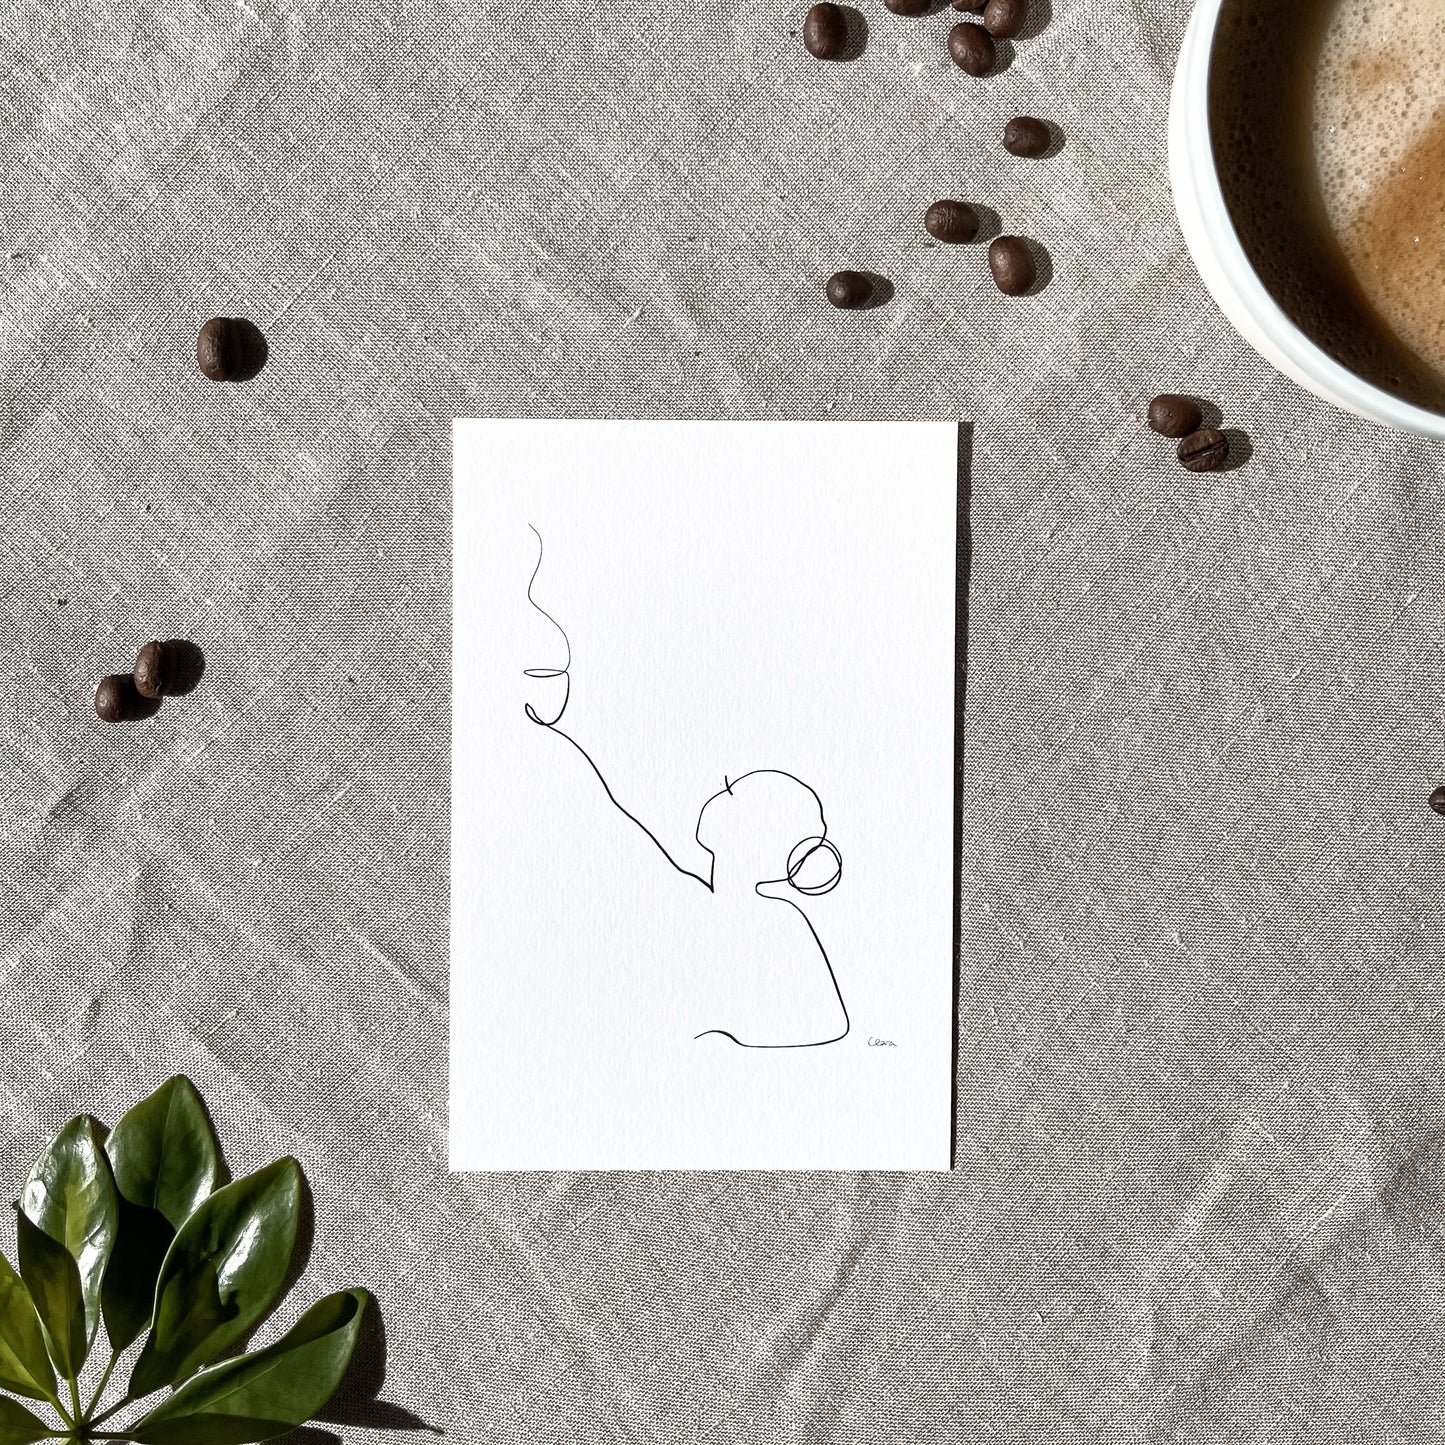 Kaffee oder Tee? Nr. 4-JUDITH CLARA-10x15 cm (zartweiß) Papier 300g-one-line-art